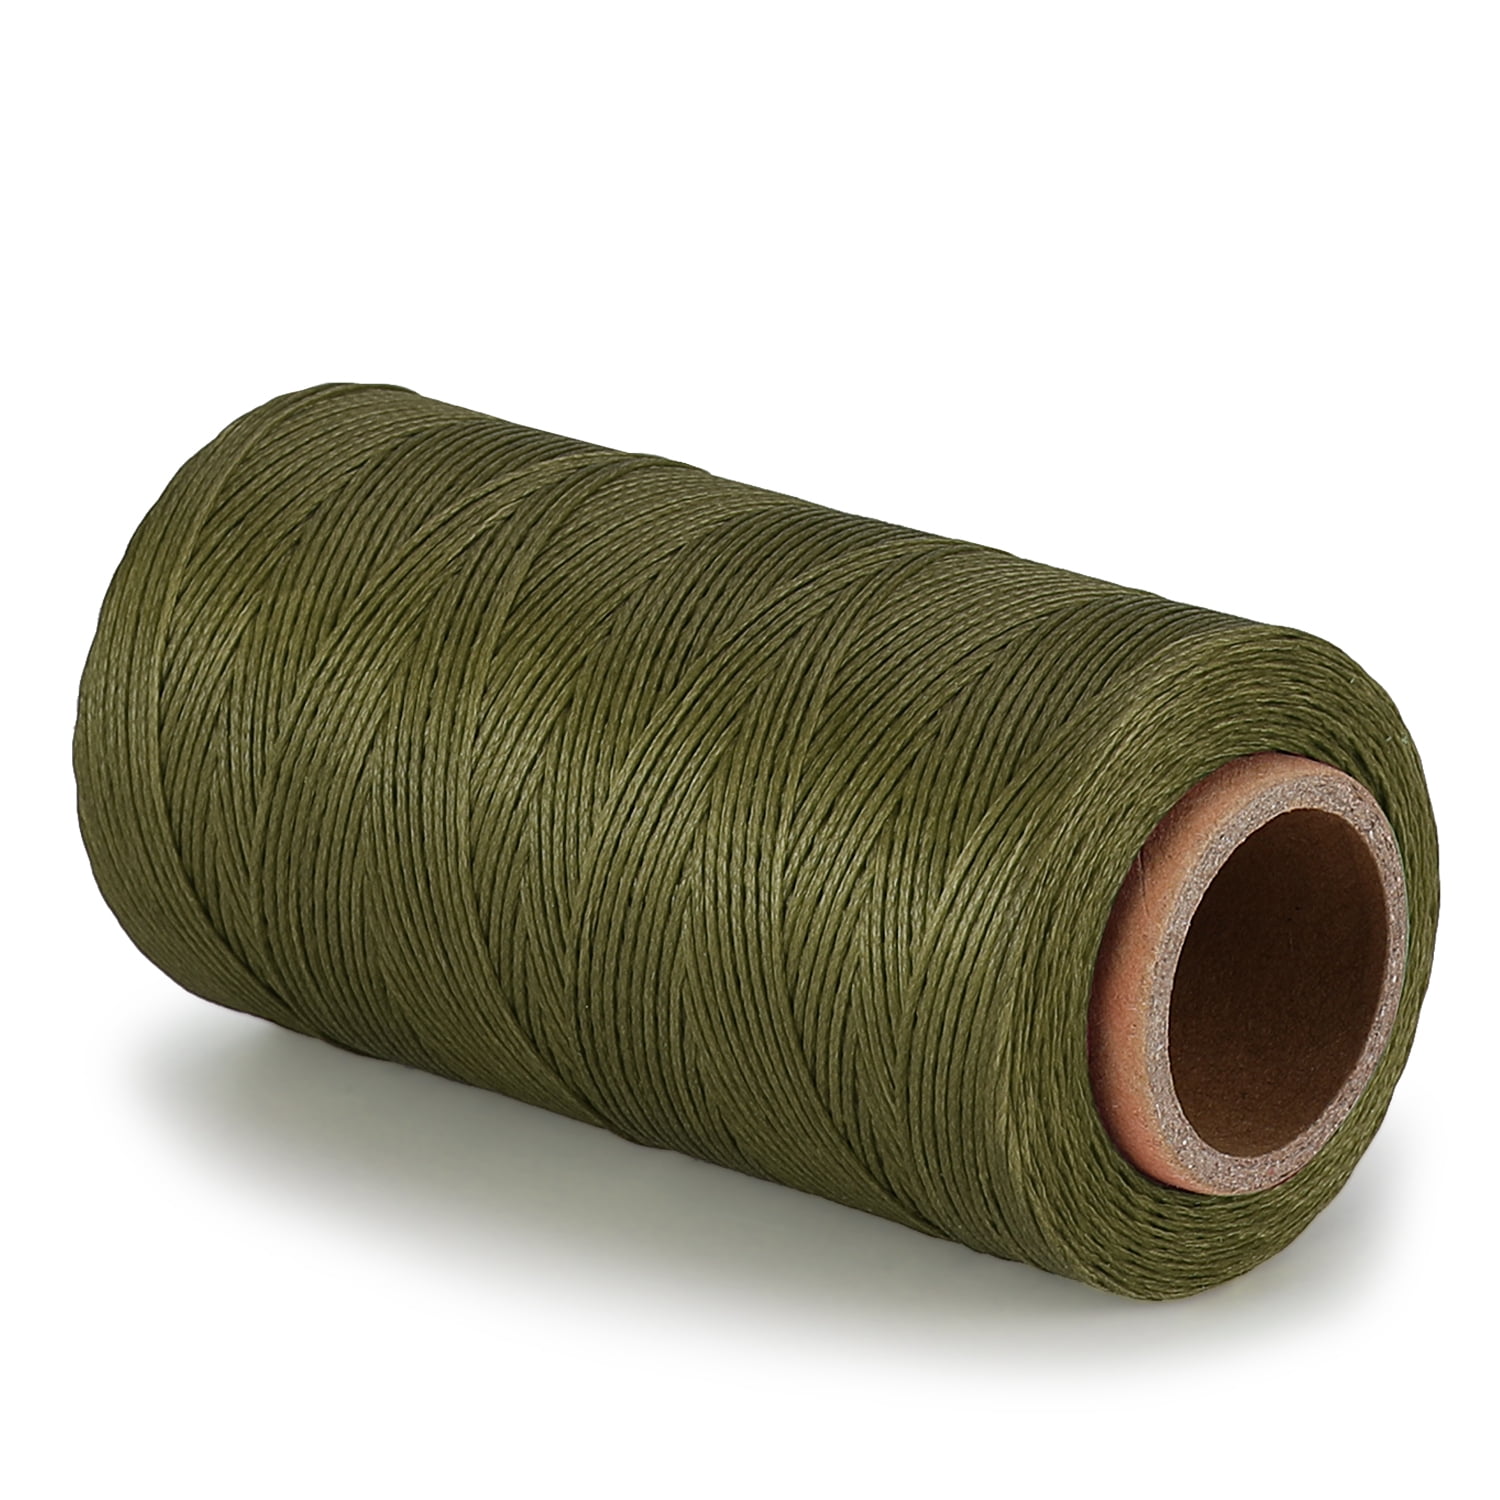 Flat Waxed Thread (Army Green) - 284Yard 1mm 150D Wax String Cord